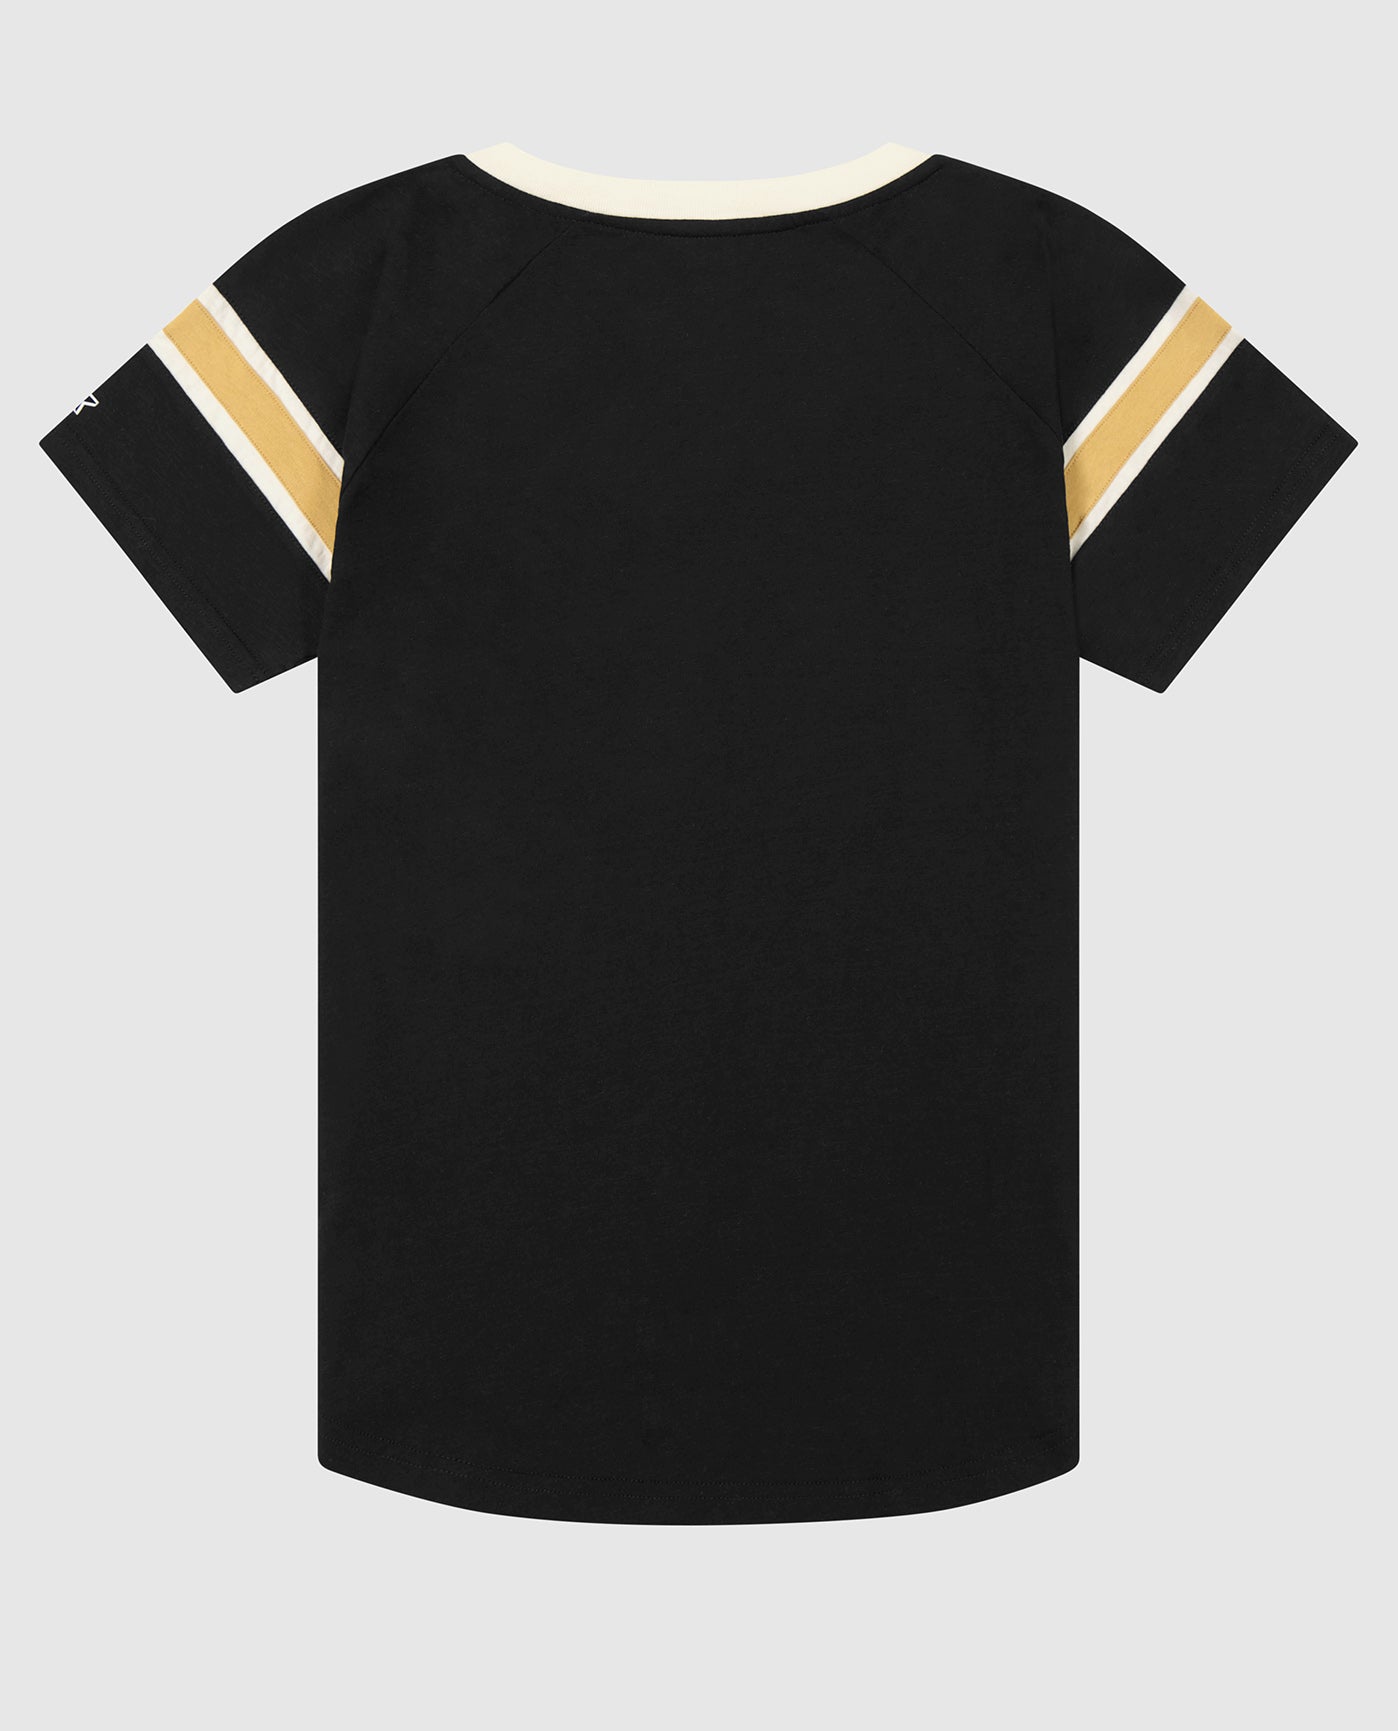 NHL Colorado Rockies Women's Gray Short Sleeve Vintage T-Shirt - XL